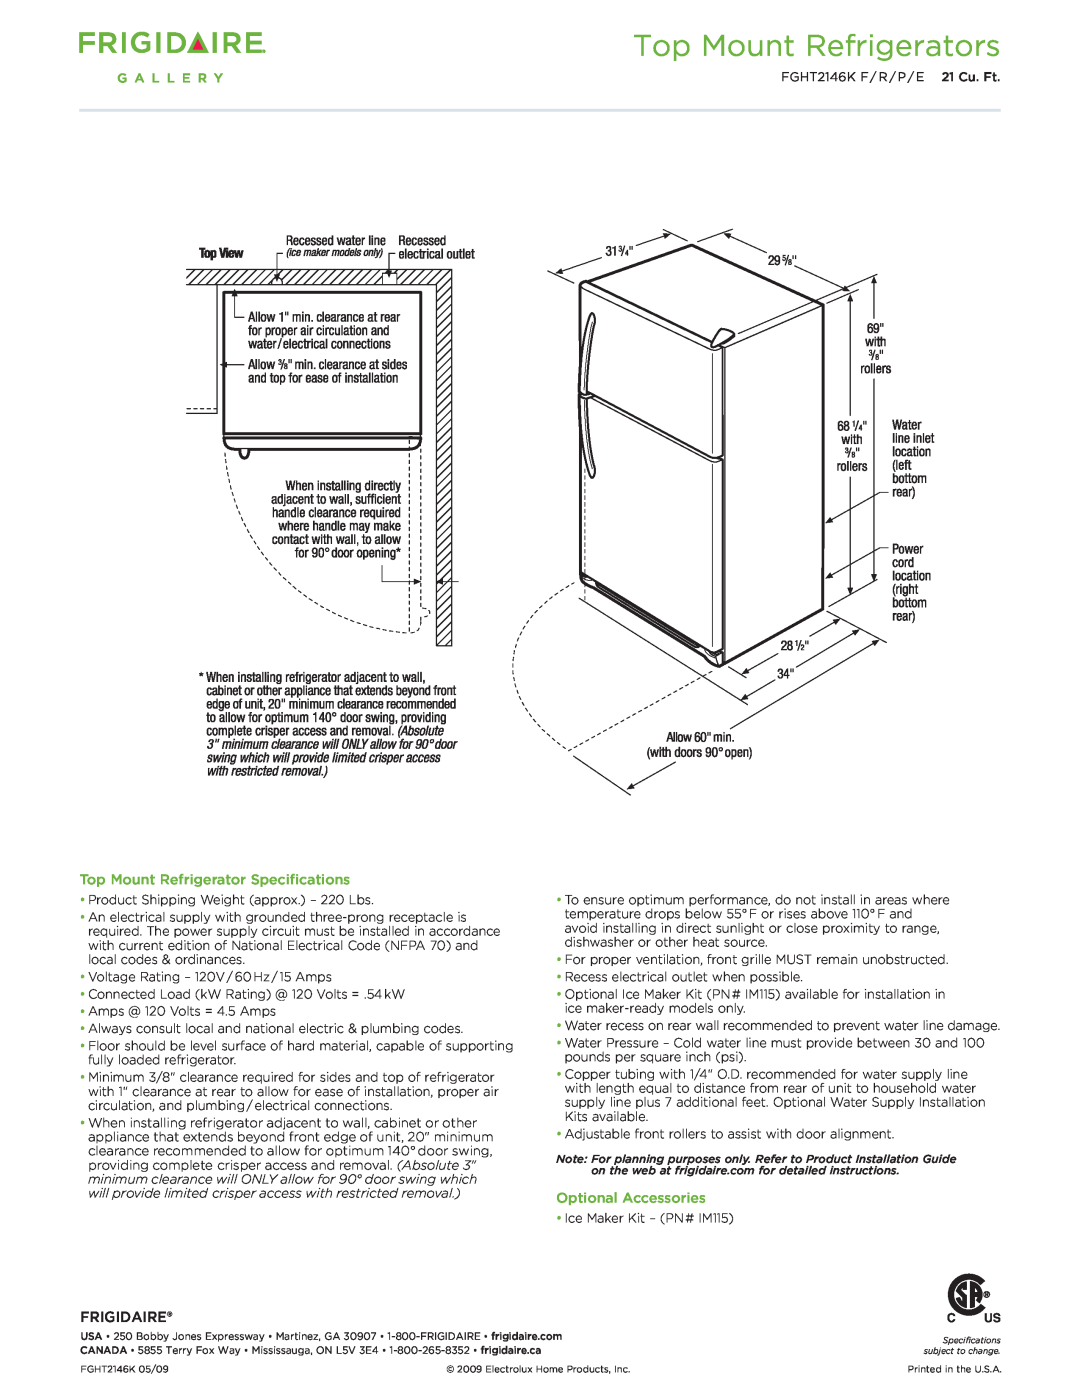 Frigidaire FGHT2146K Top Mount Refrigerator Specifications, Optional Accessories, Frigidaire, Top Mount Refrigerators 